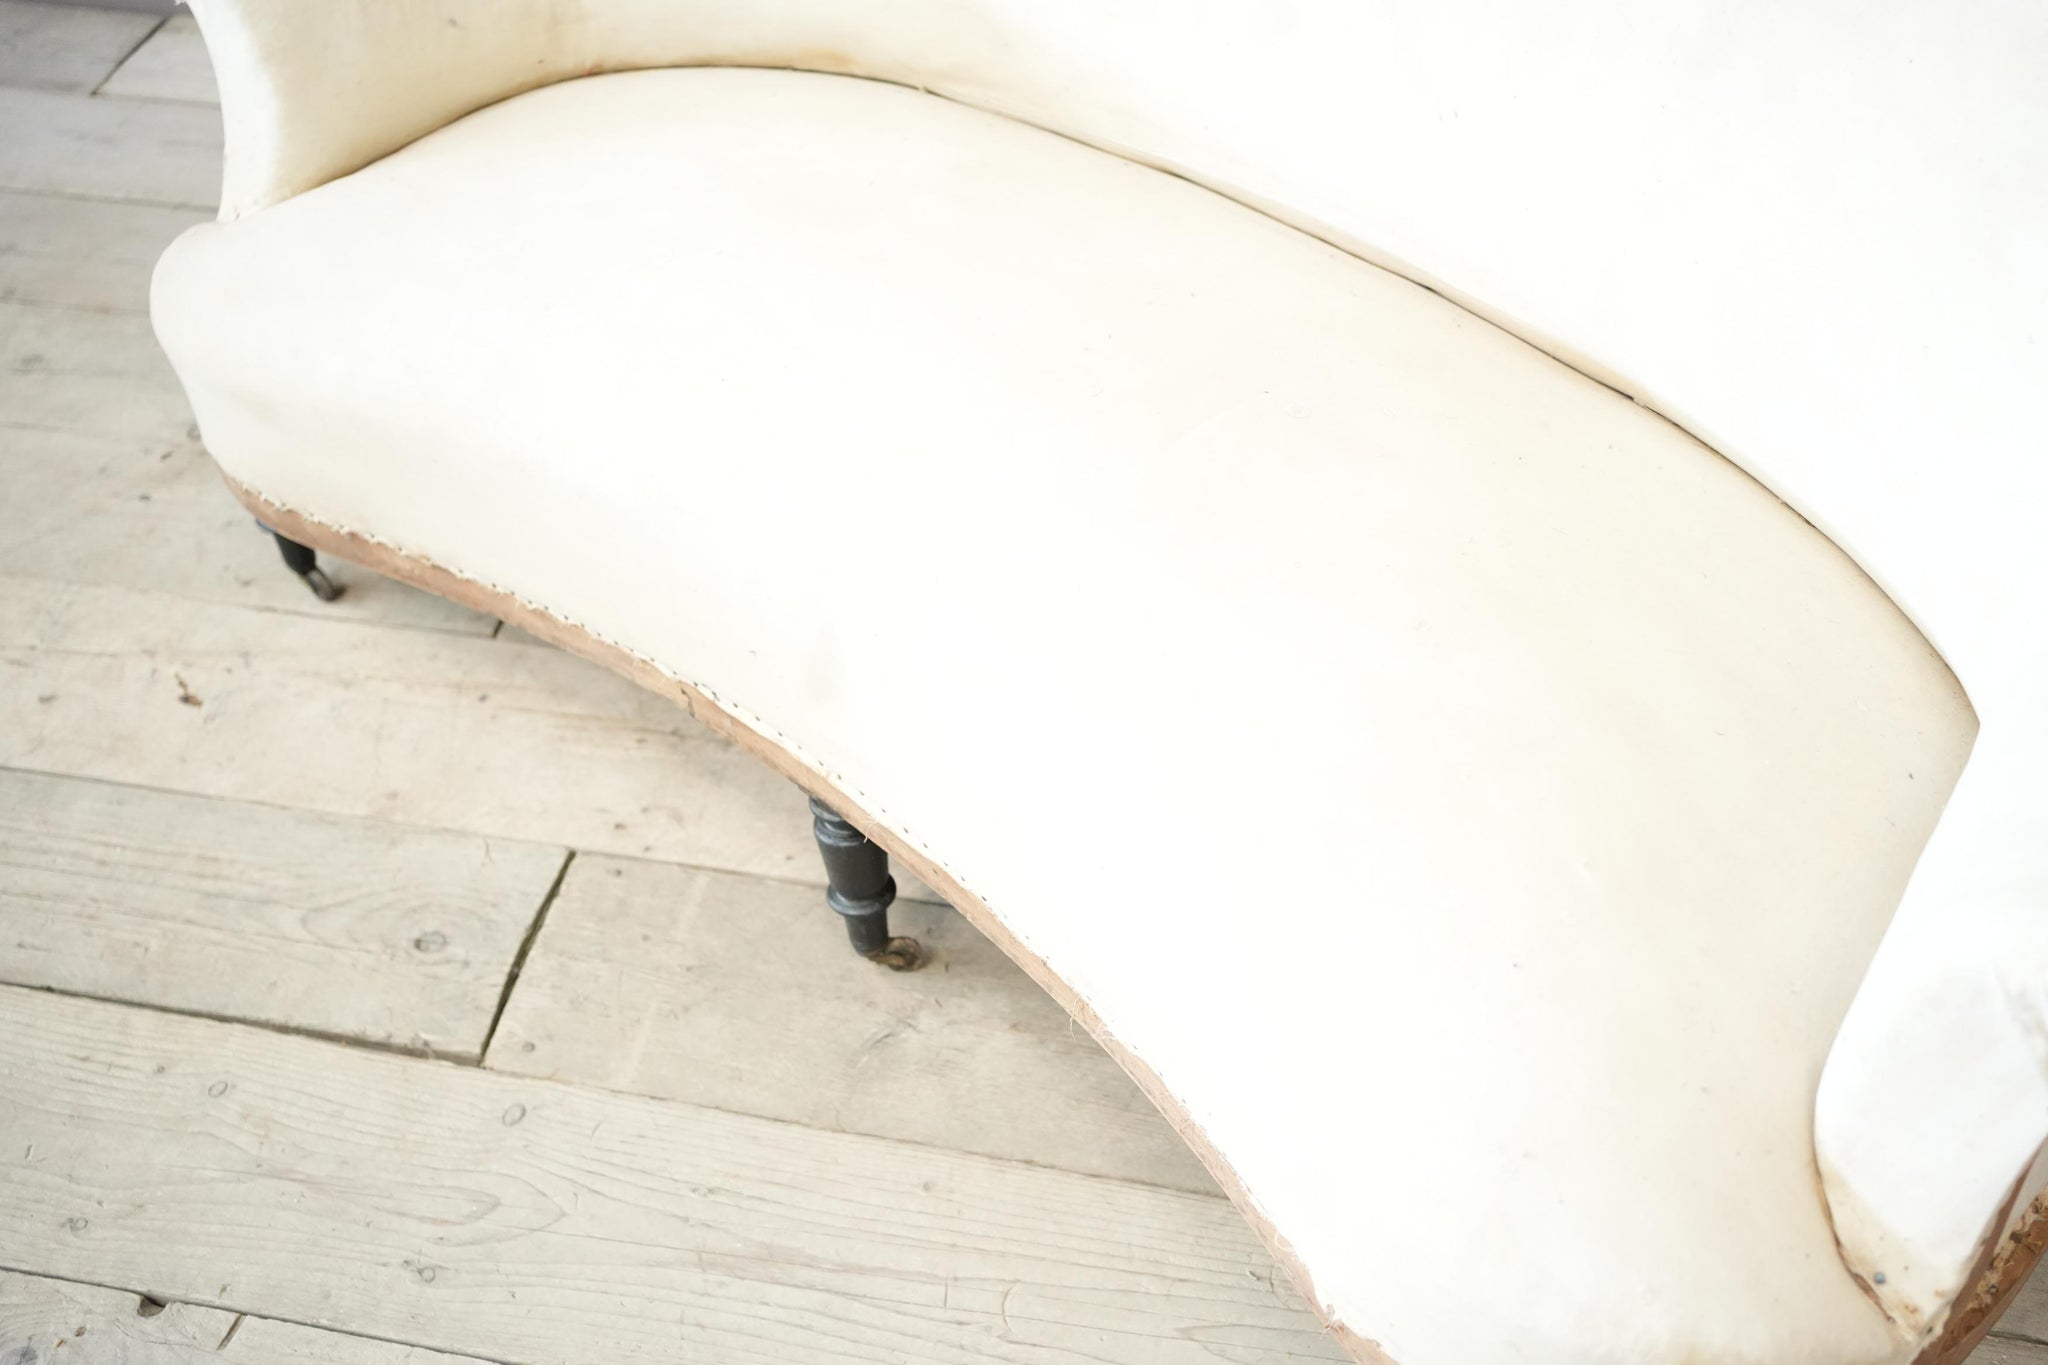 Napoleon III Kidney shaped sofa